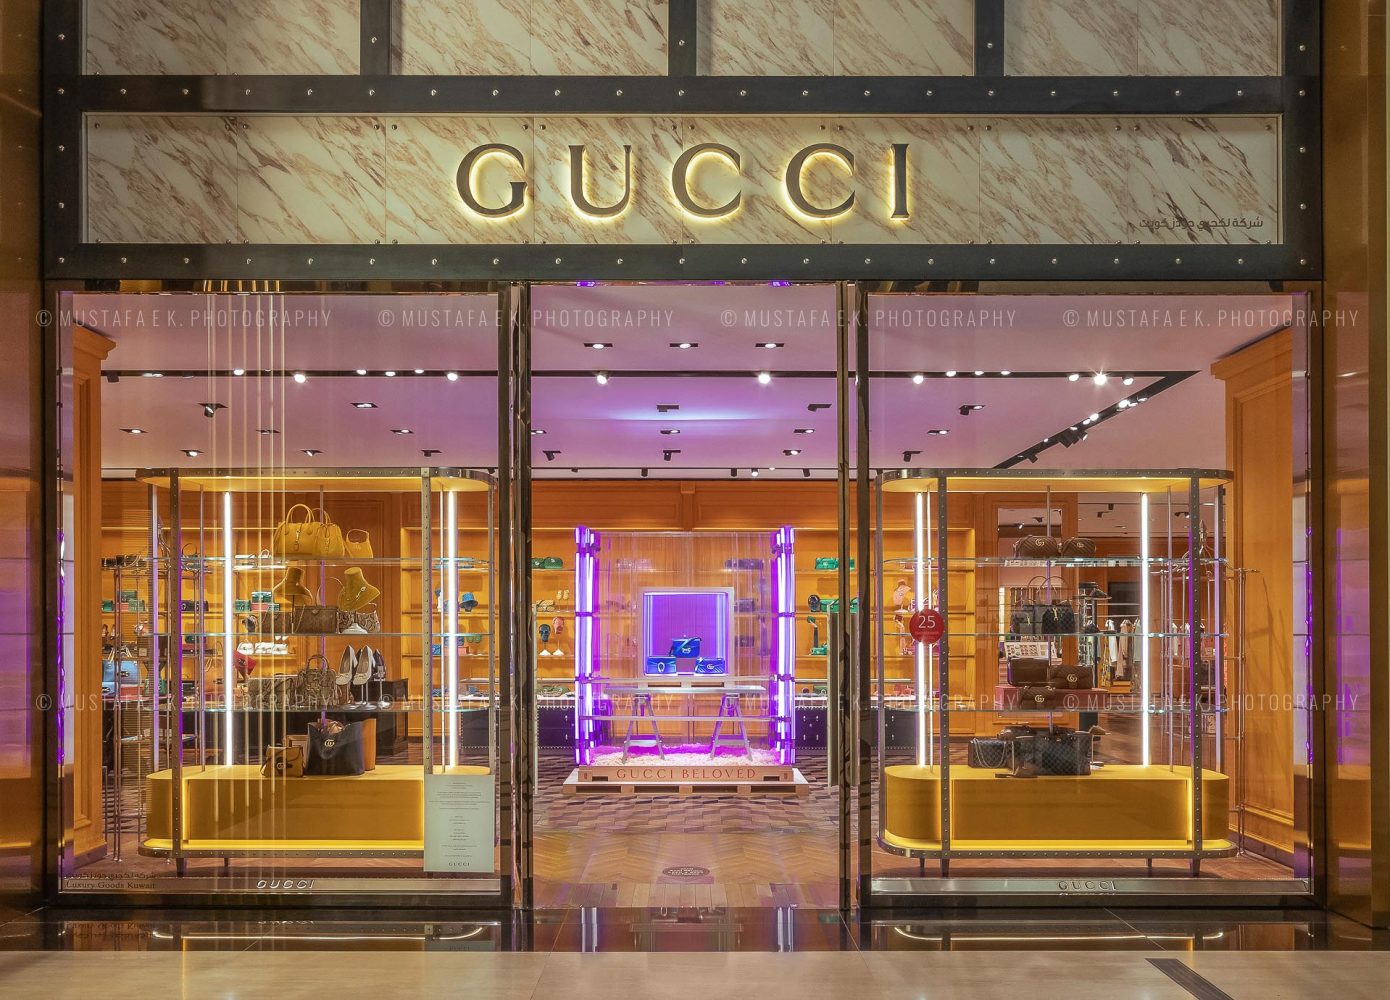 Gucci Retail Pop up in Store Photographer Interior Architecture Dubai UAE Abu Dhabi Kuwait Musthafa 2